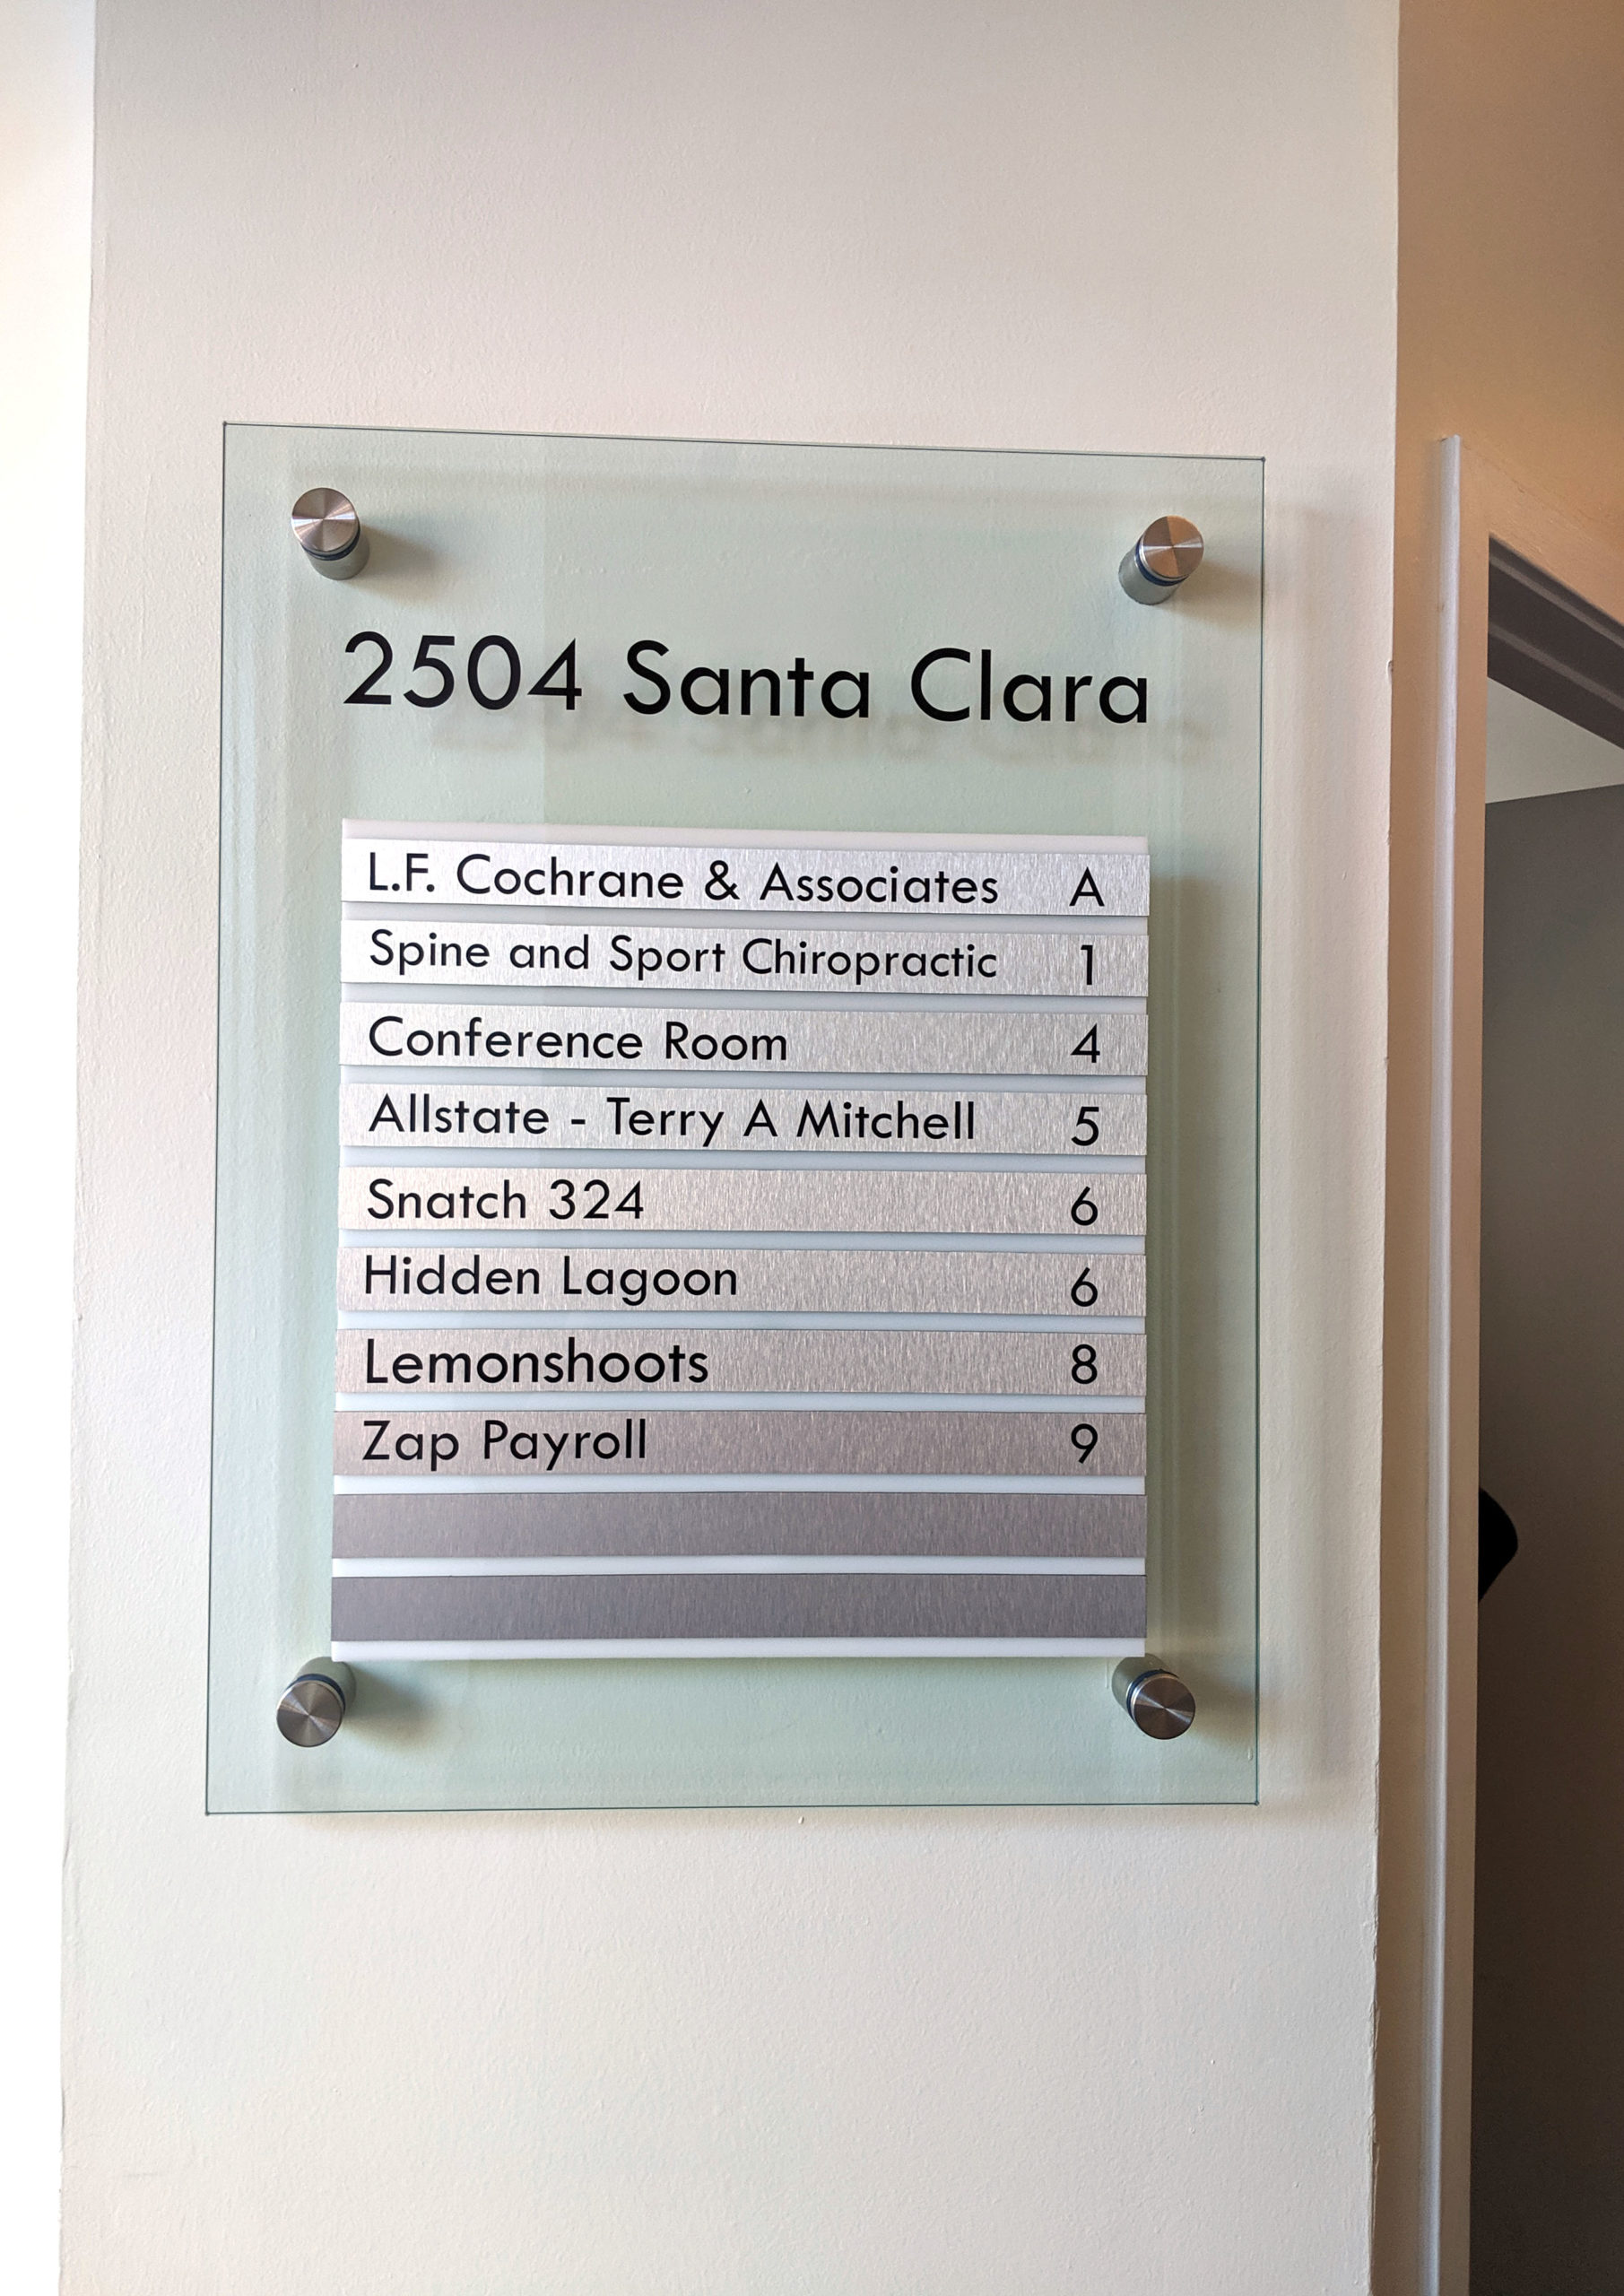 2504 Santa Clara office directory